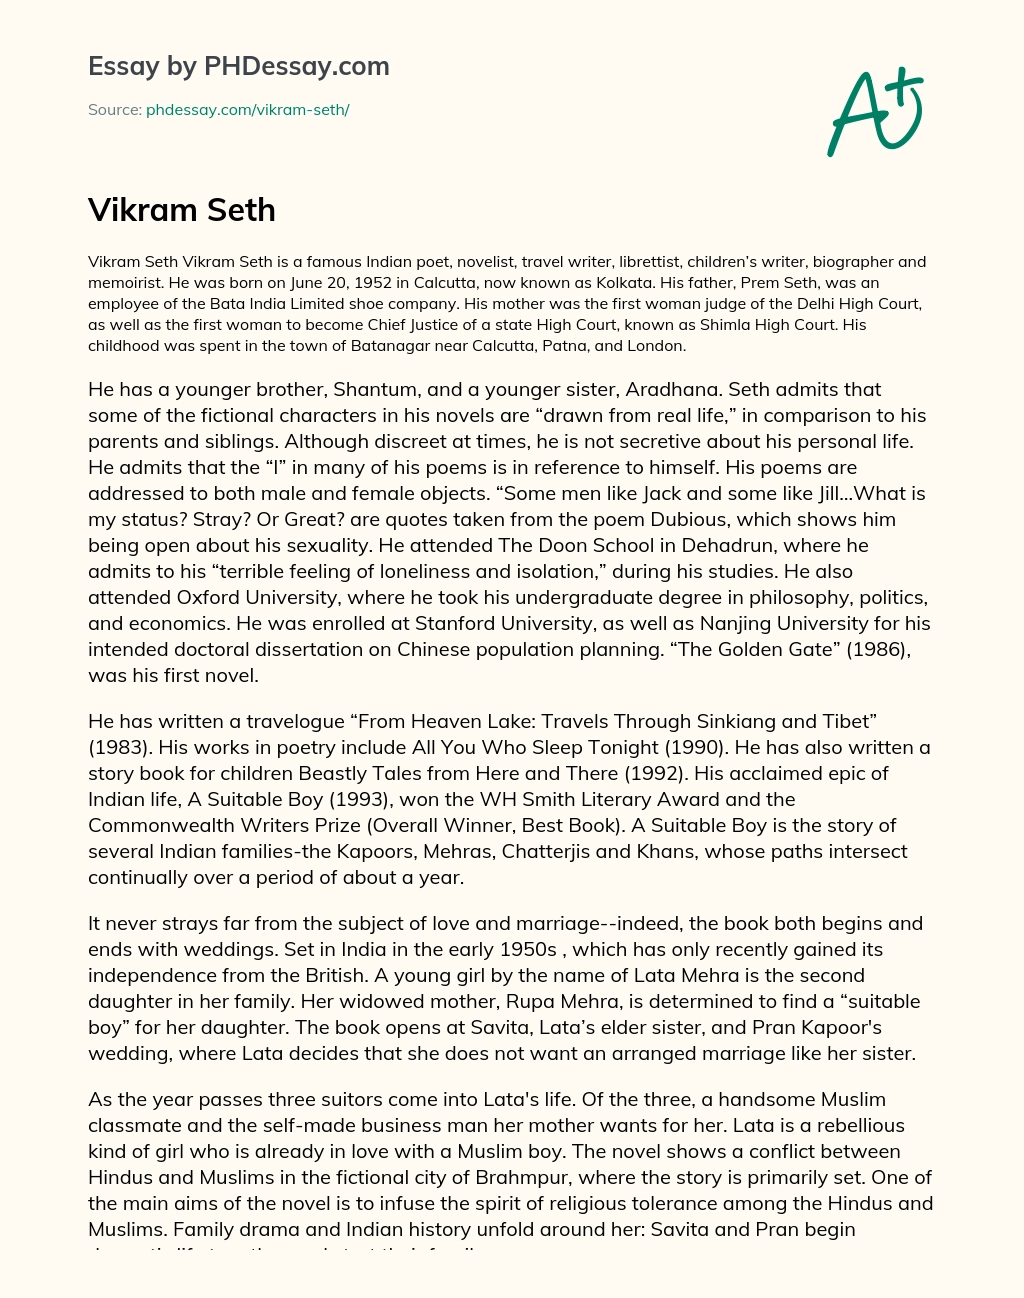 summary of the golden gate by vikram seth